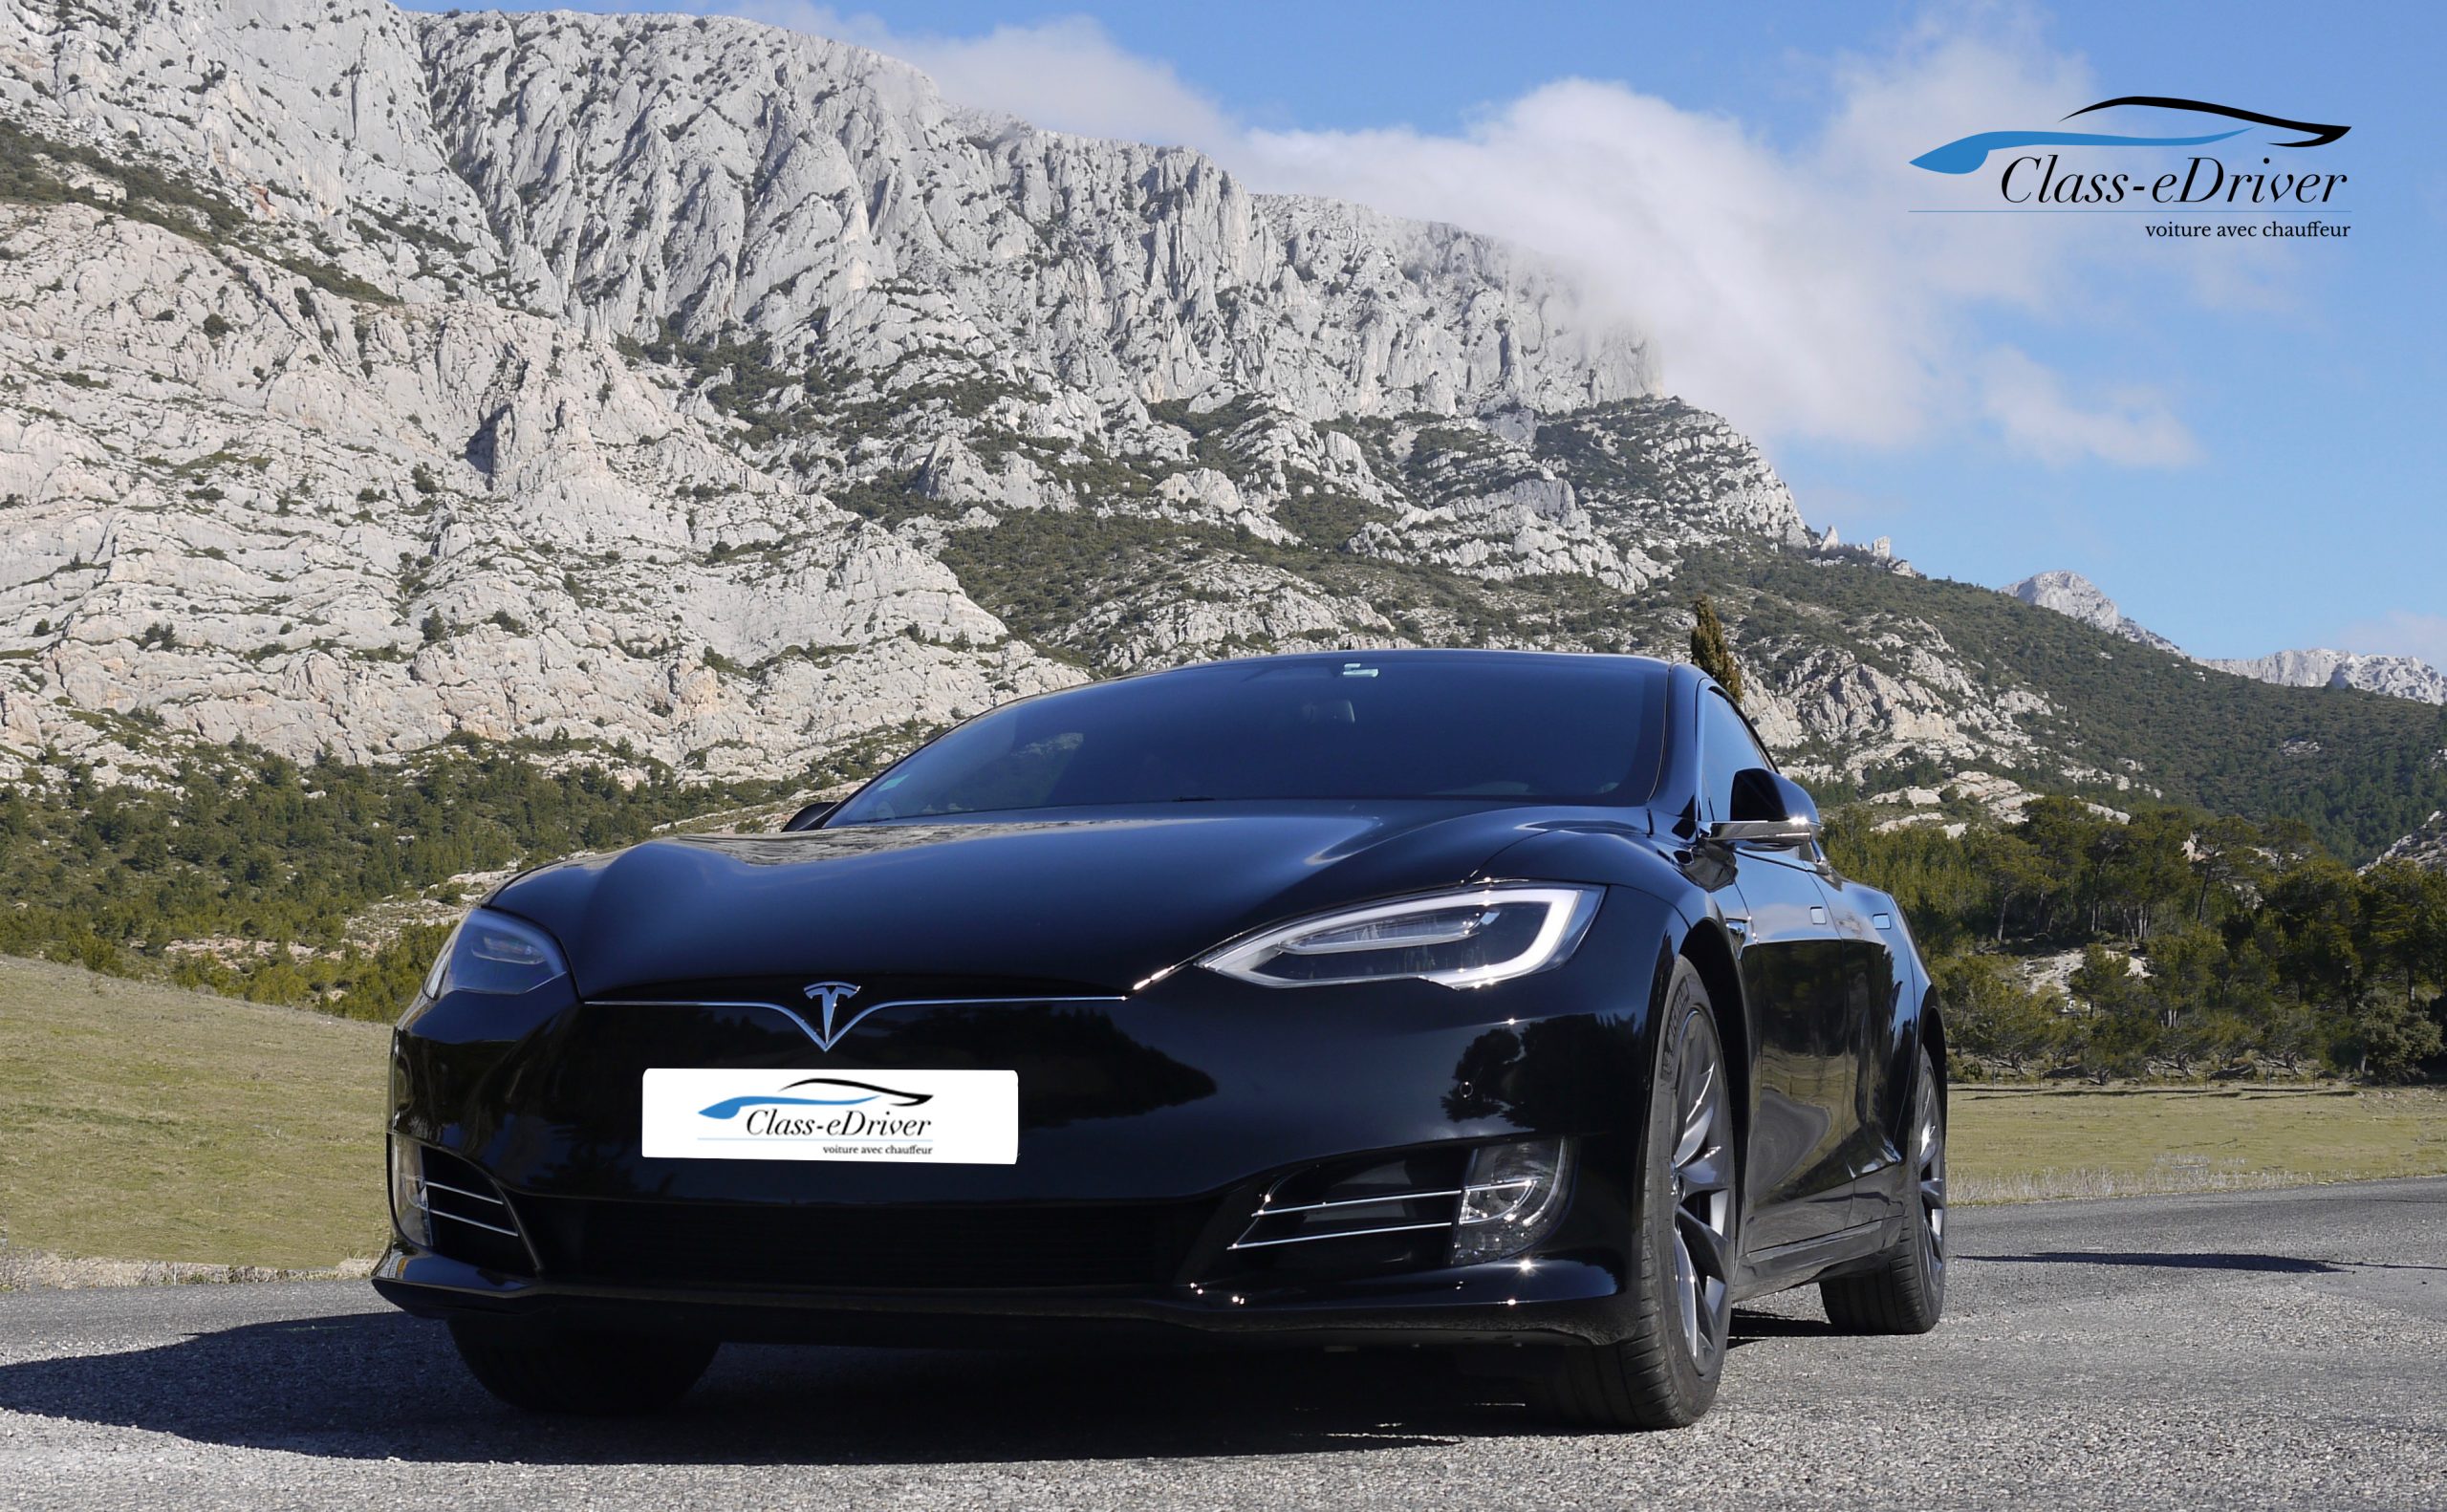 Chauffeured Car Service Tesla Aix en Provence